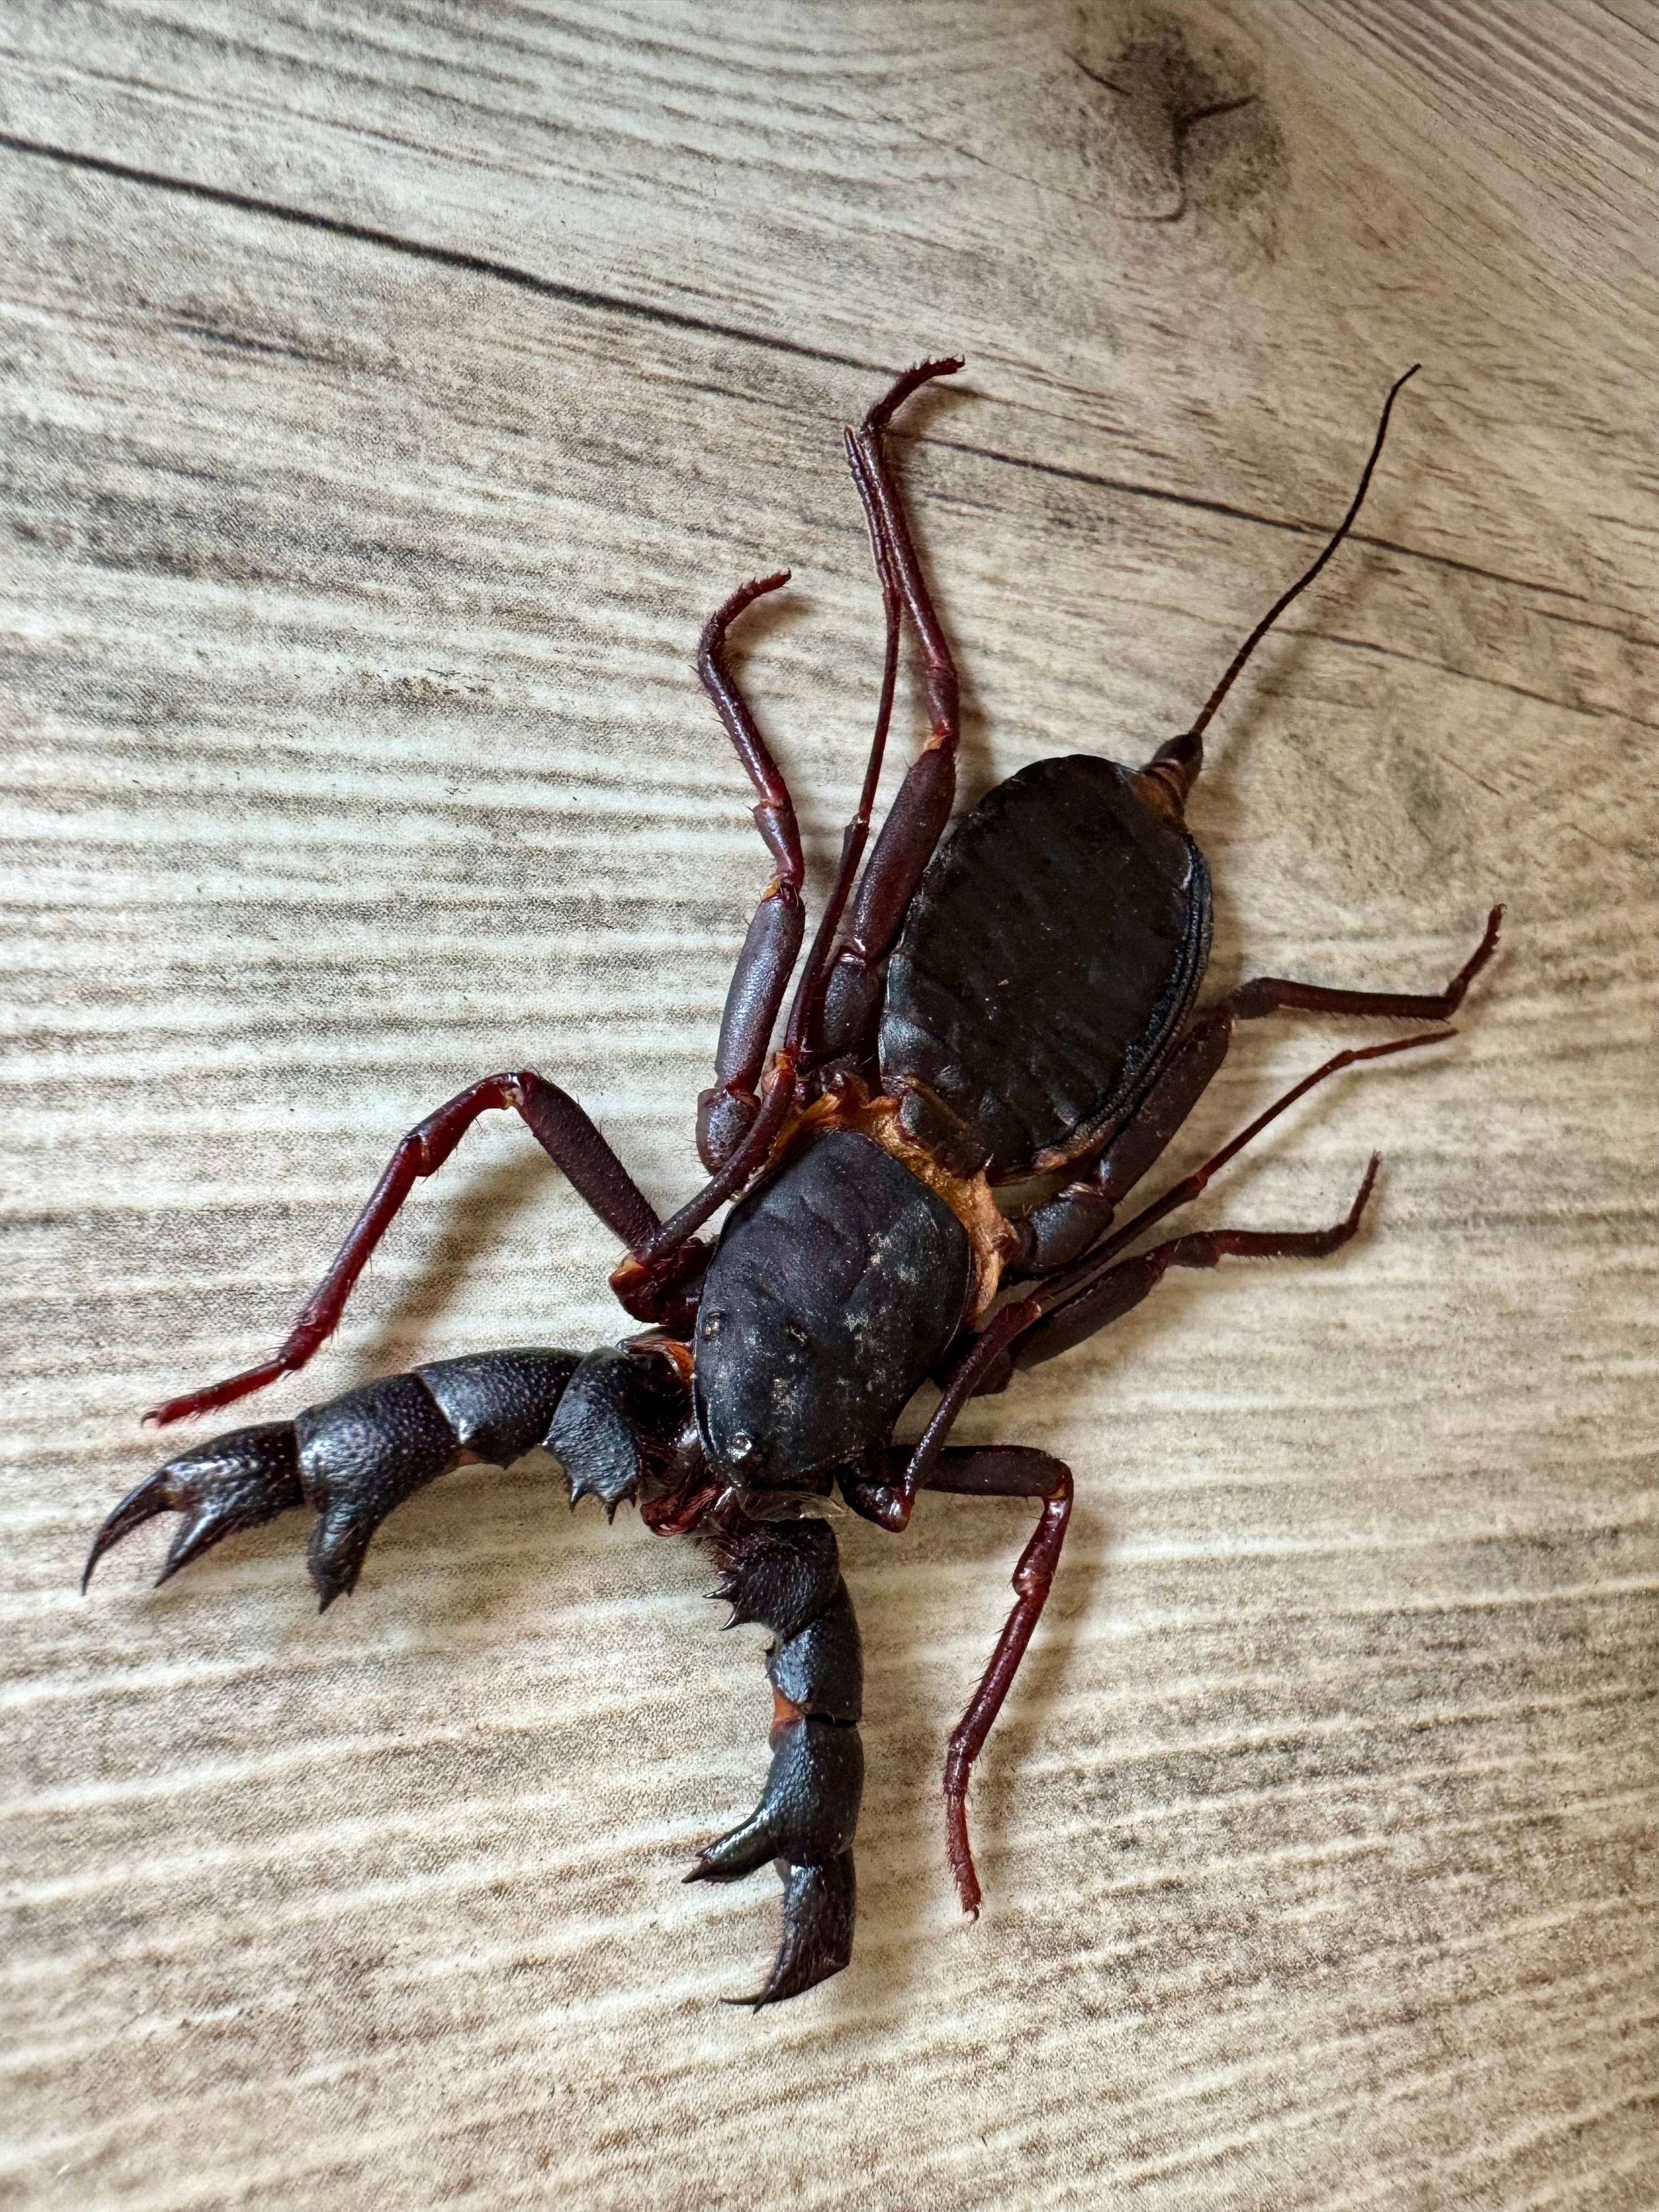 Vinegaroon Whip Scorpion 'Hypocnoctus siamensis' SPREAD